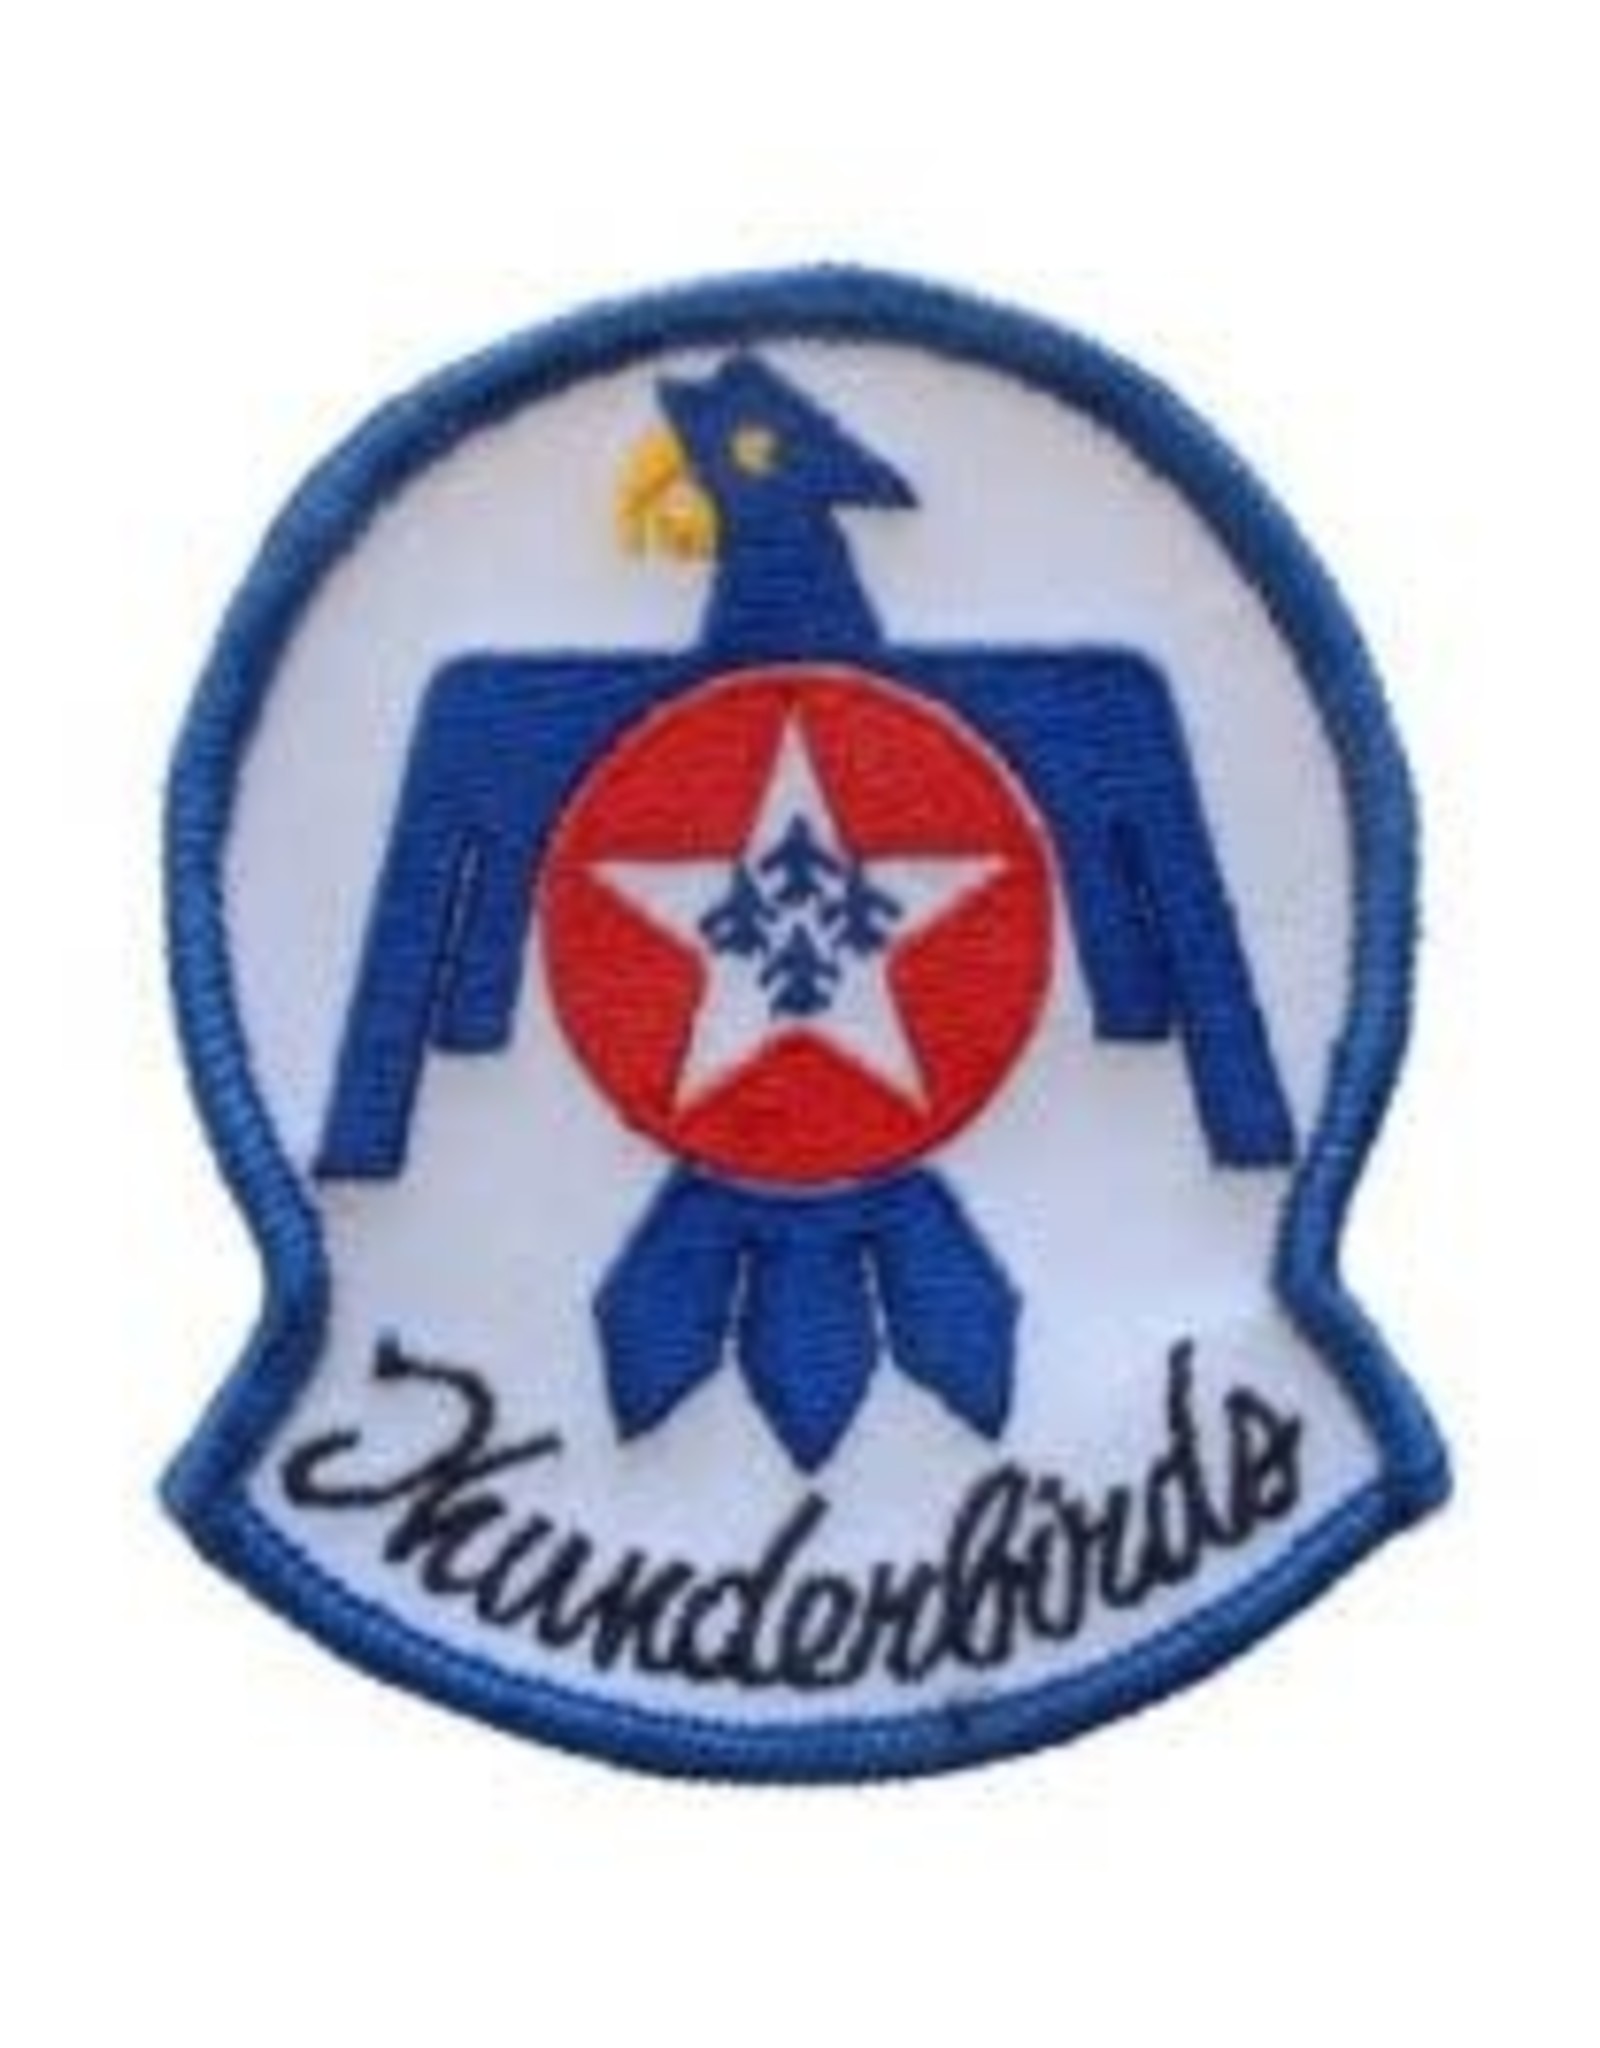 Patch - USAF Thunderbirds